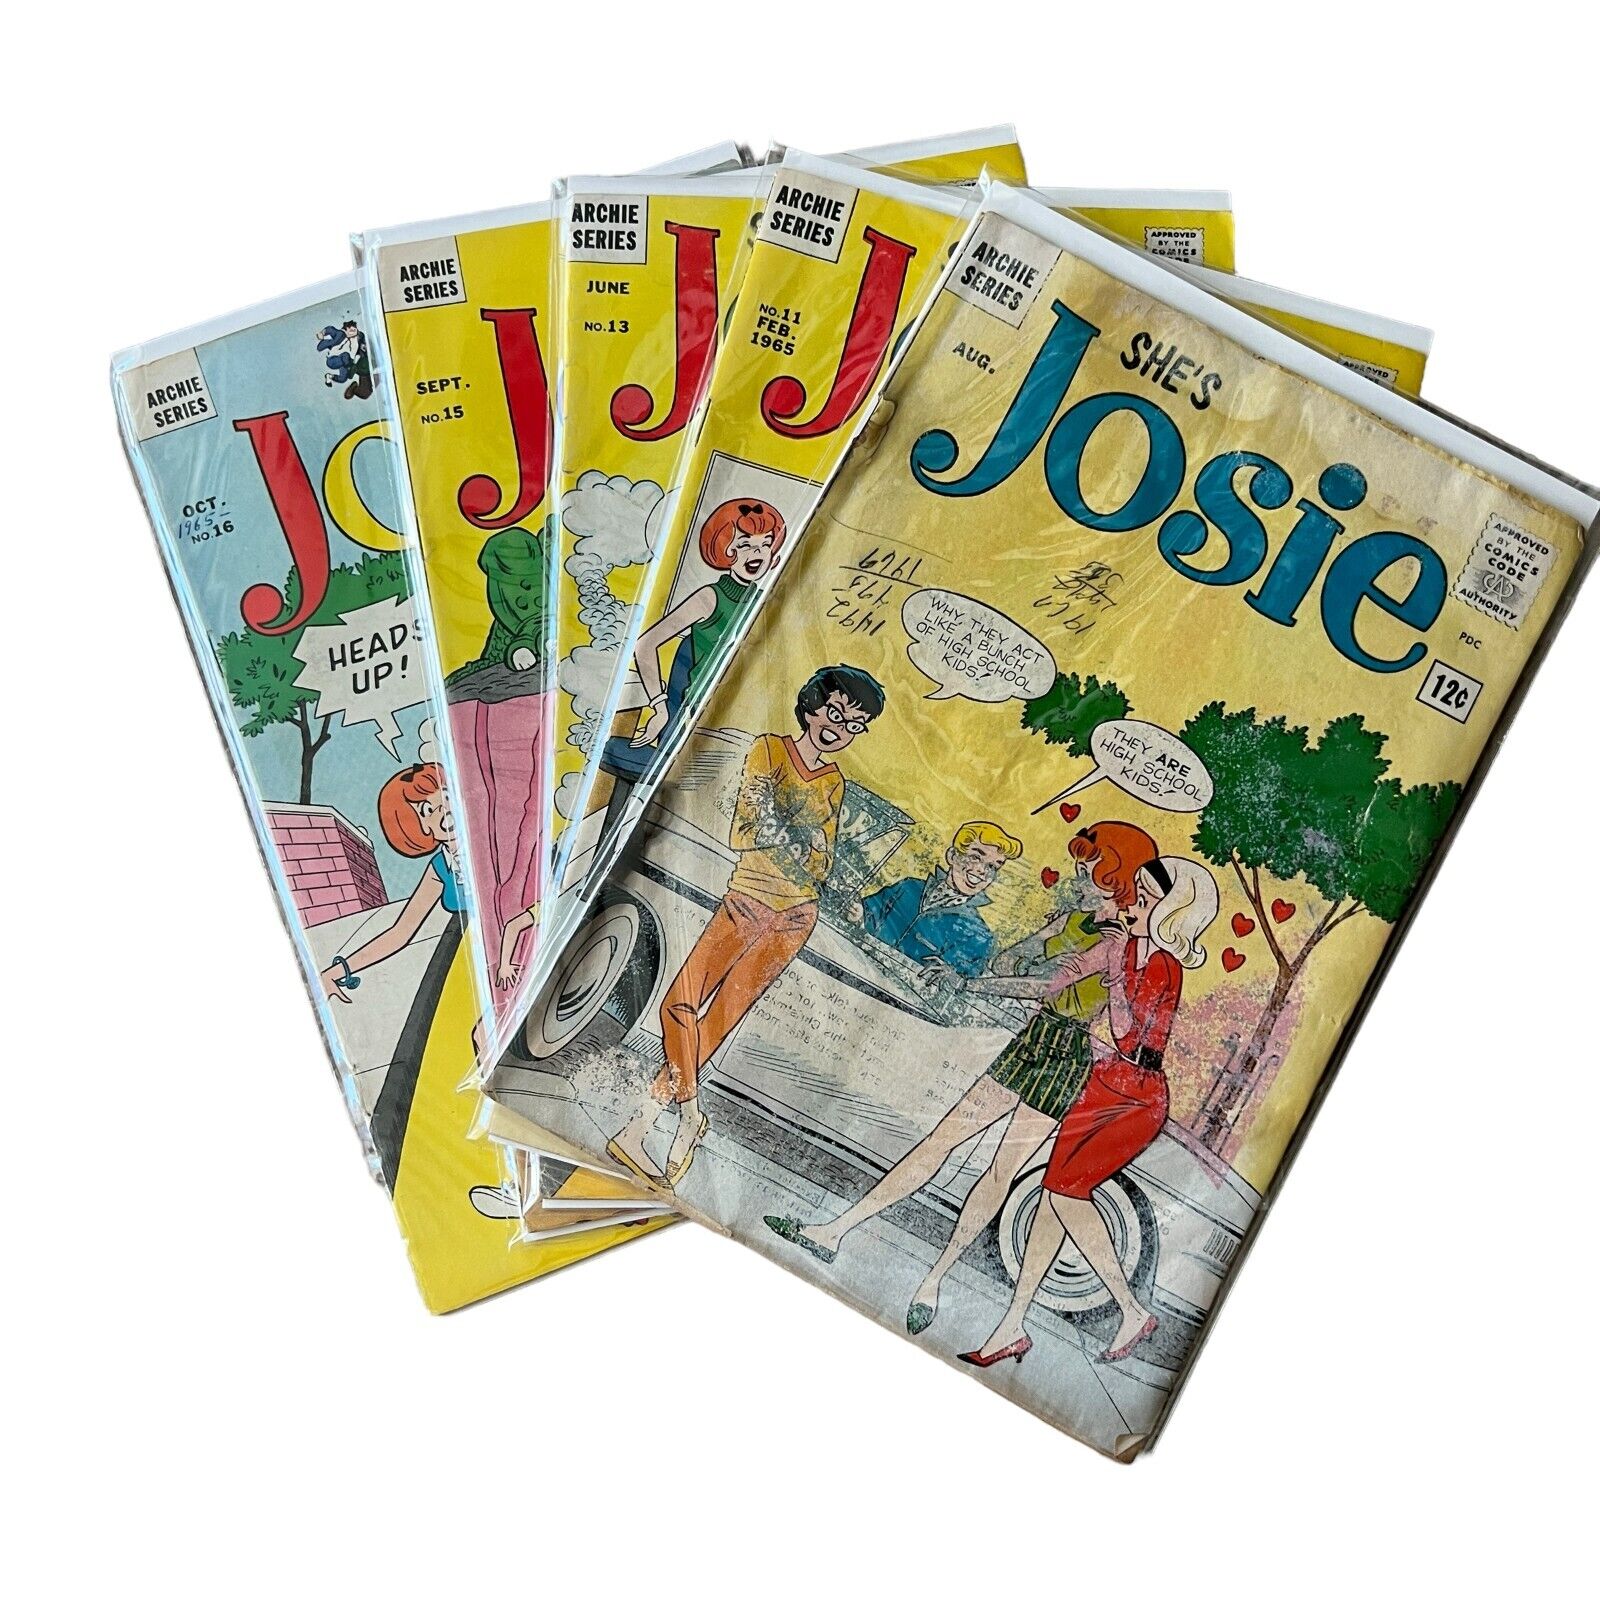 She's Josie Lot GGA # 2, 11, 13, 15, 16 Silver Age Archie Series